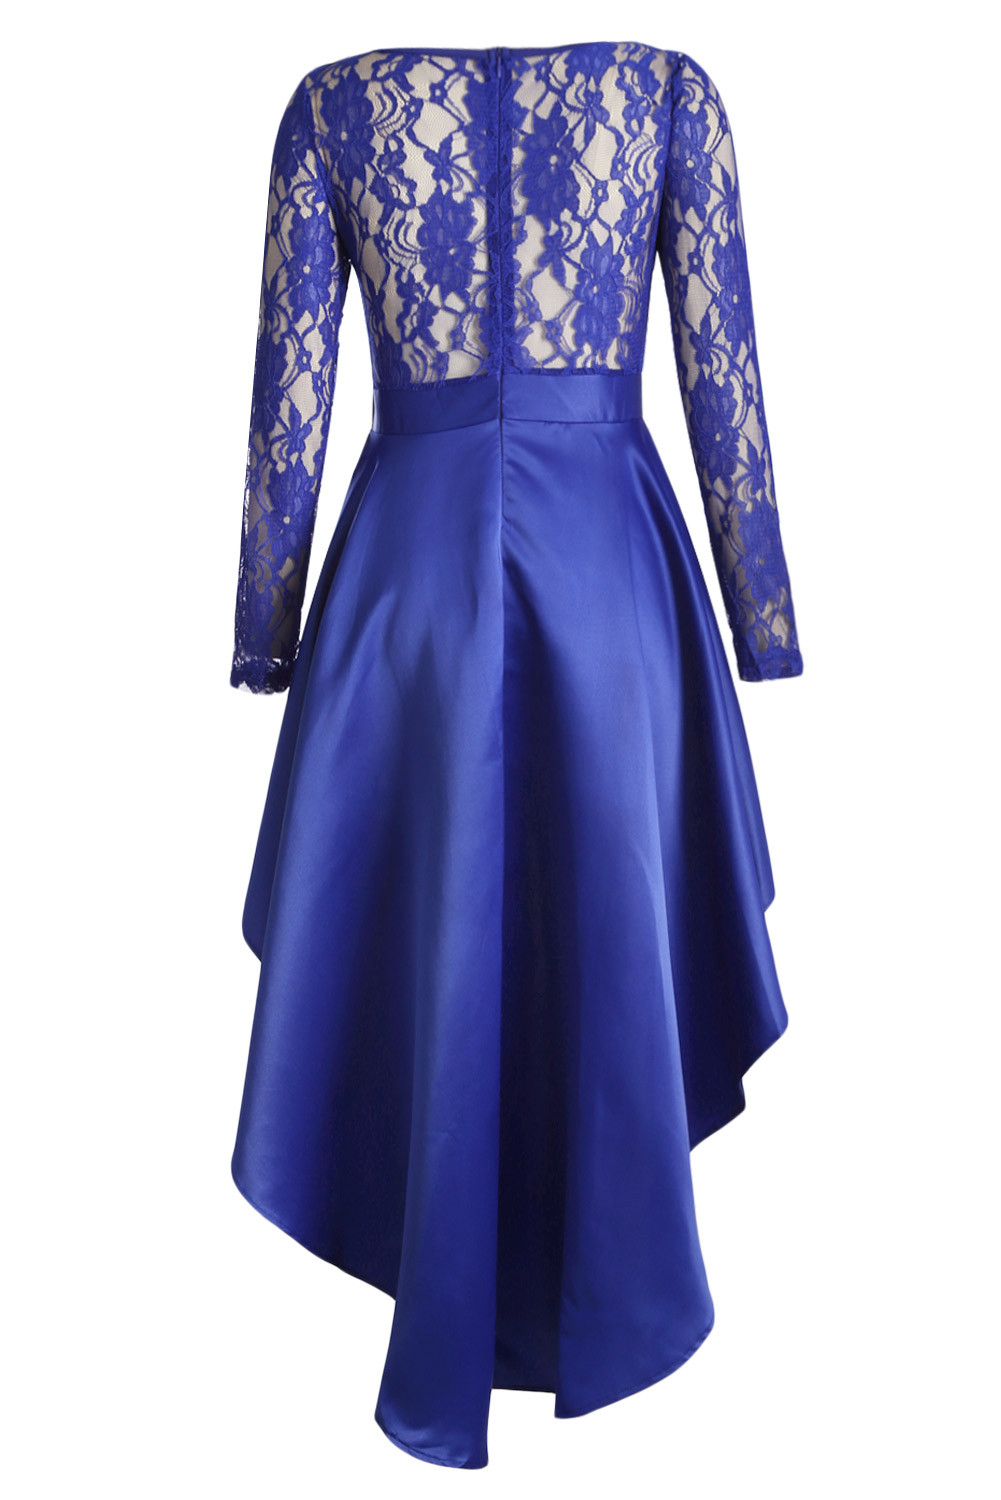 Dropship Royal Blue Long Sleeve Lace High Low Satin Prom Dress